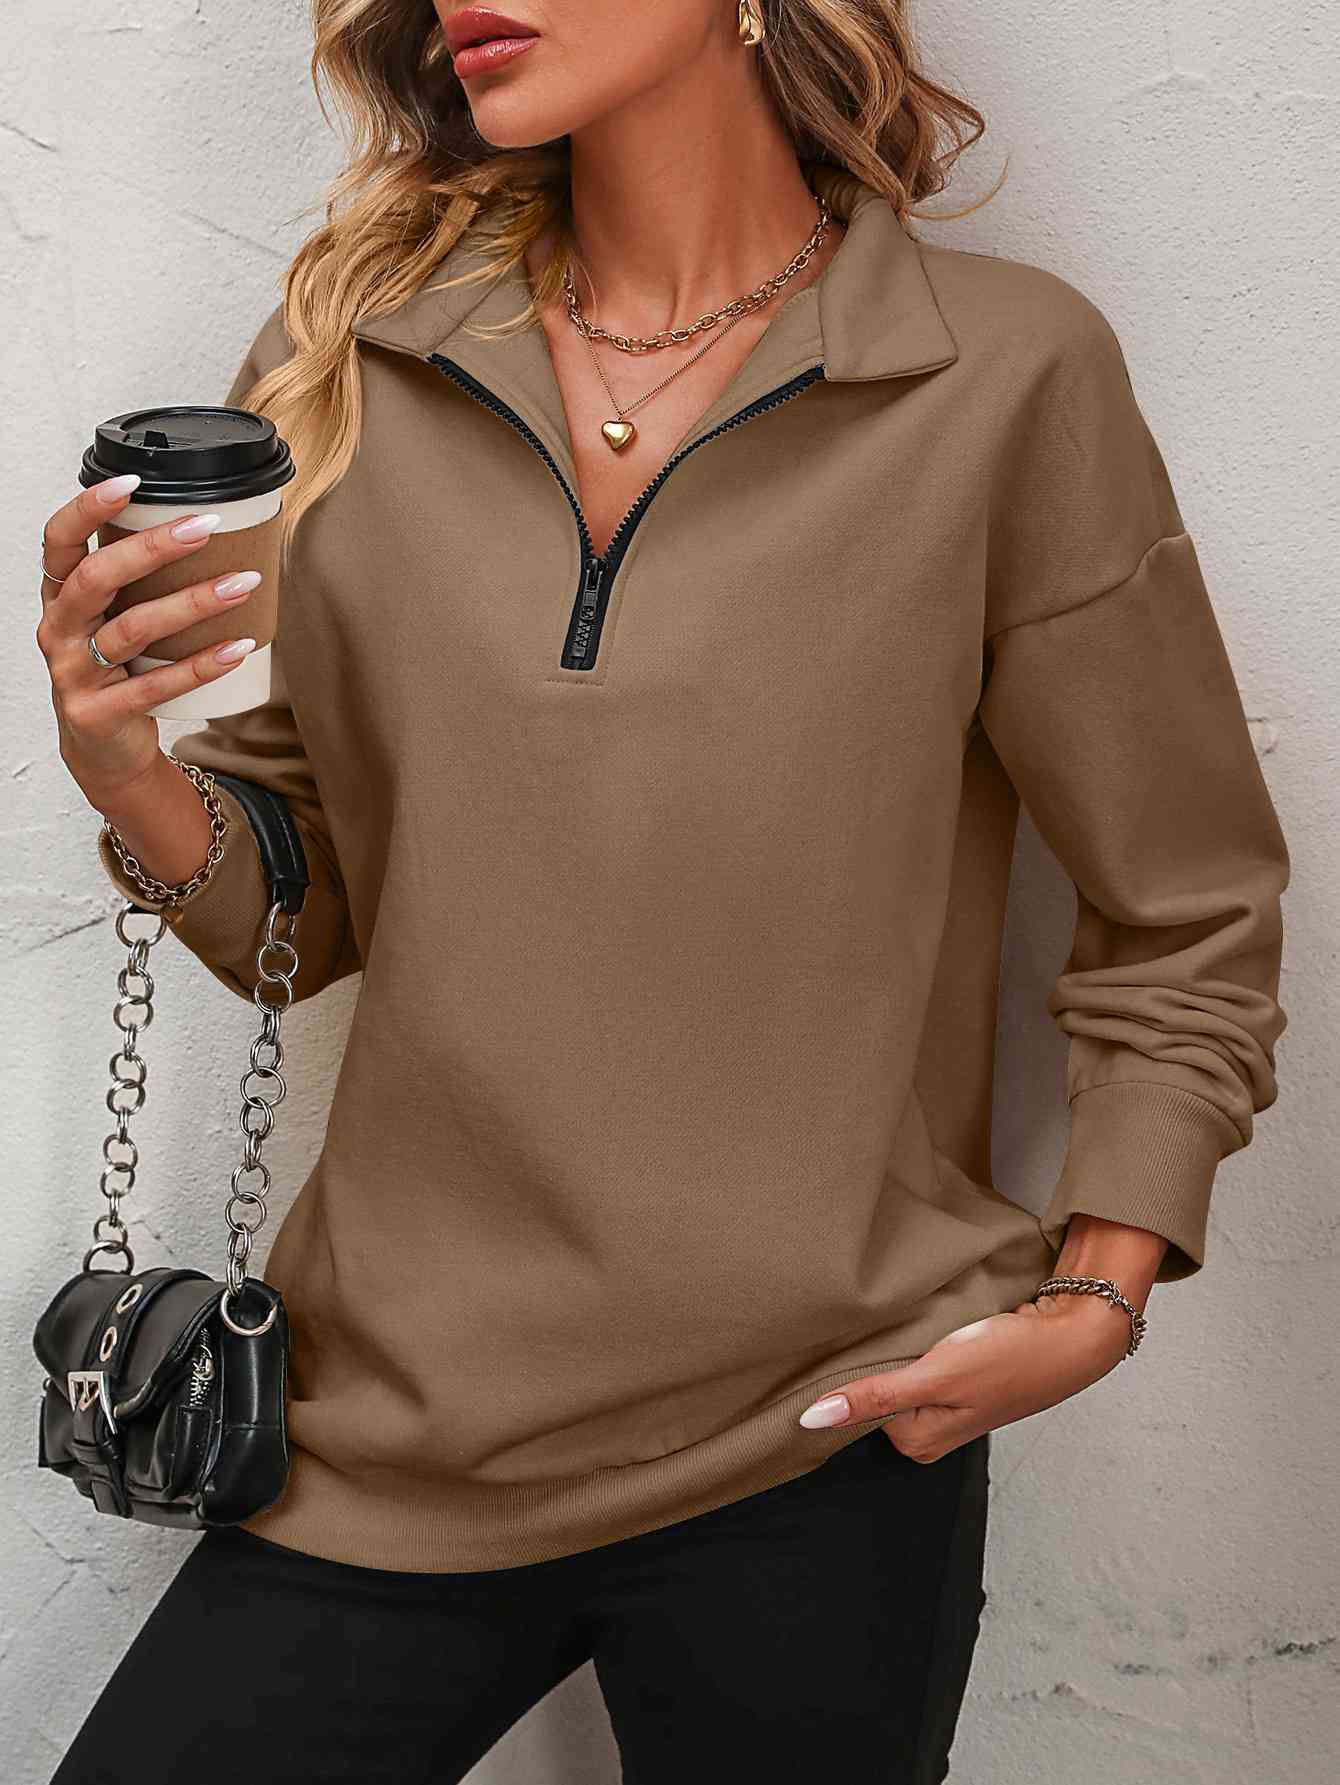 Zip-Up Dropped Shoulder Sweatshirt - Just Enuff Sexy